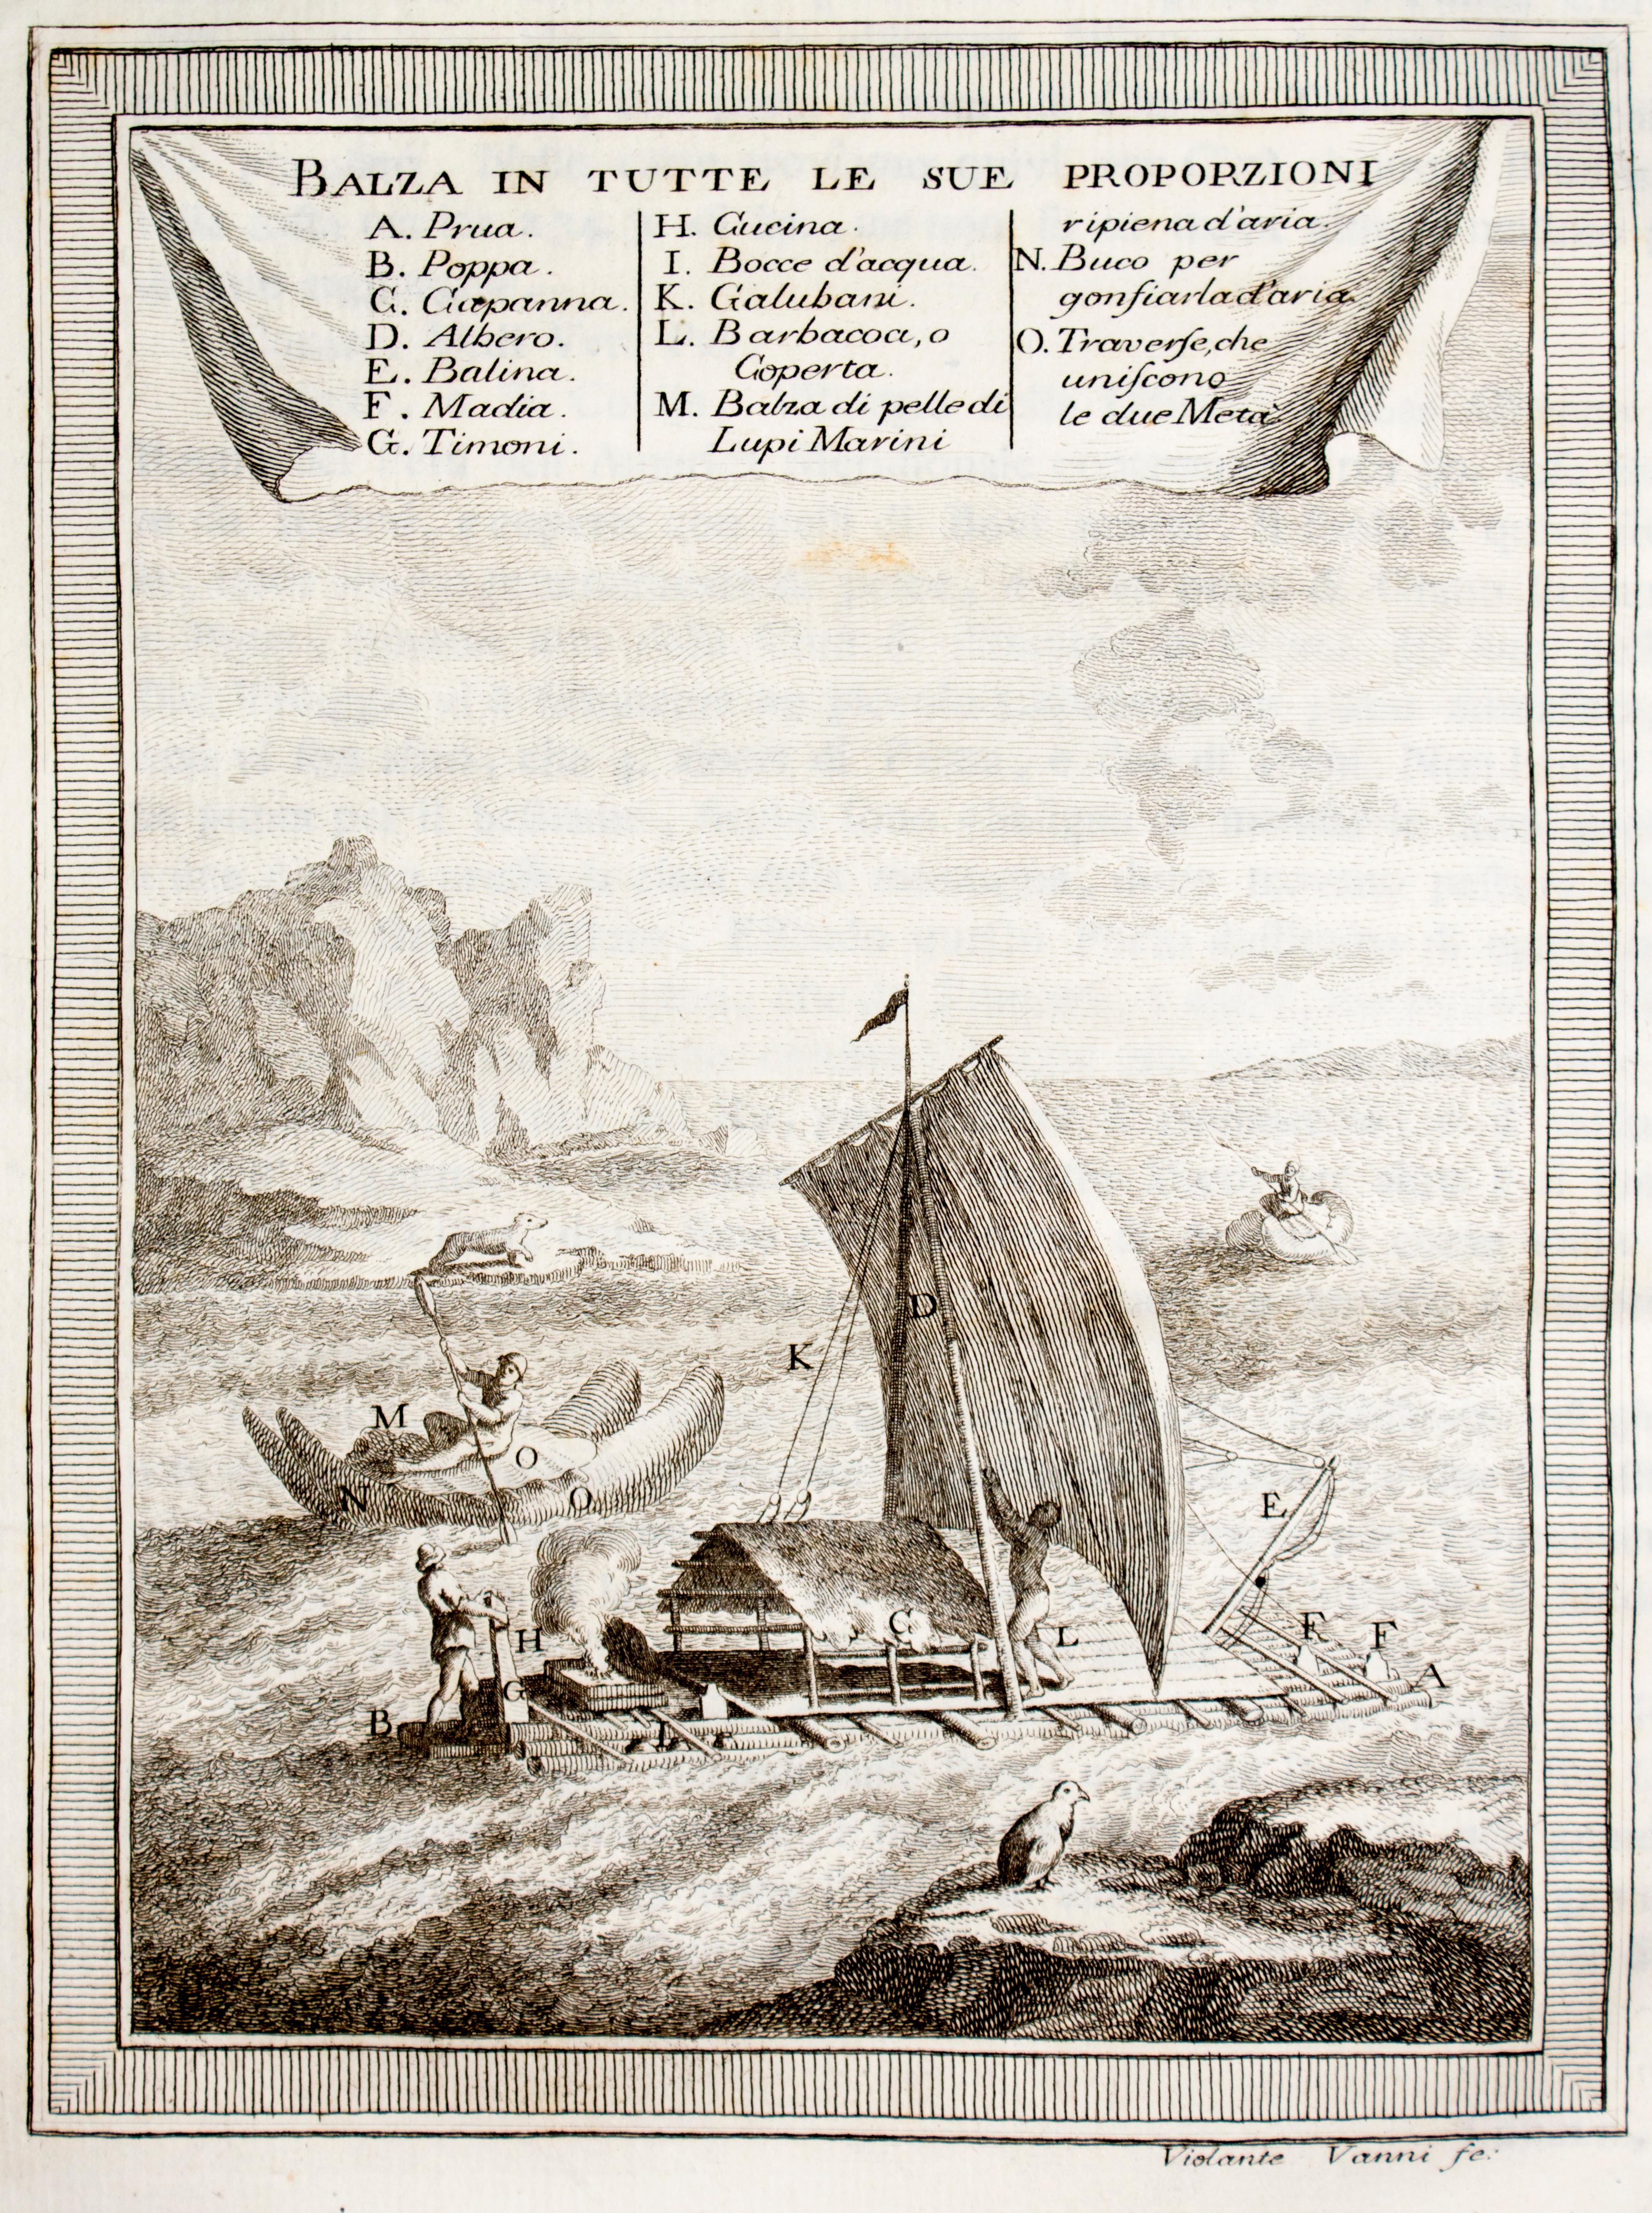 Il Gazzettiere Americano - Ancient Illustrated Book on the Americas - 1763 For Sale 2